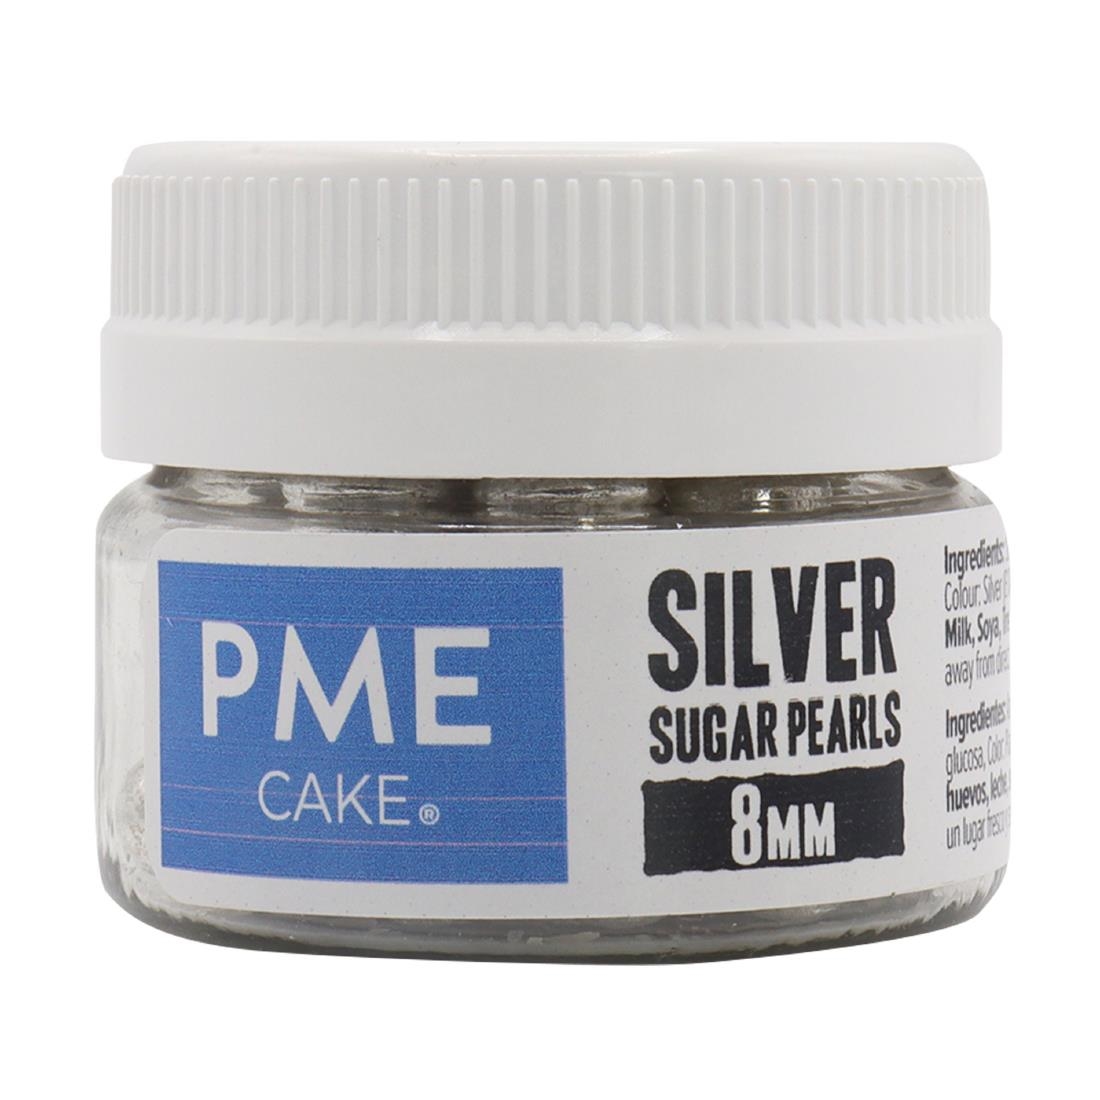 PME Silver Sugar Pearls 8mm (HU234)